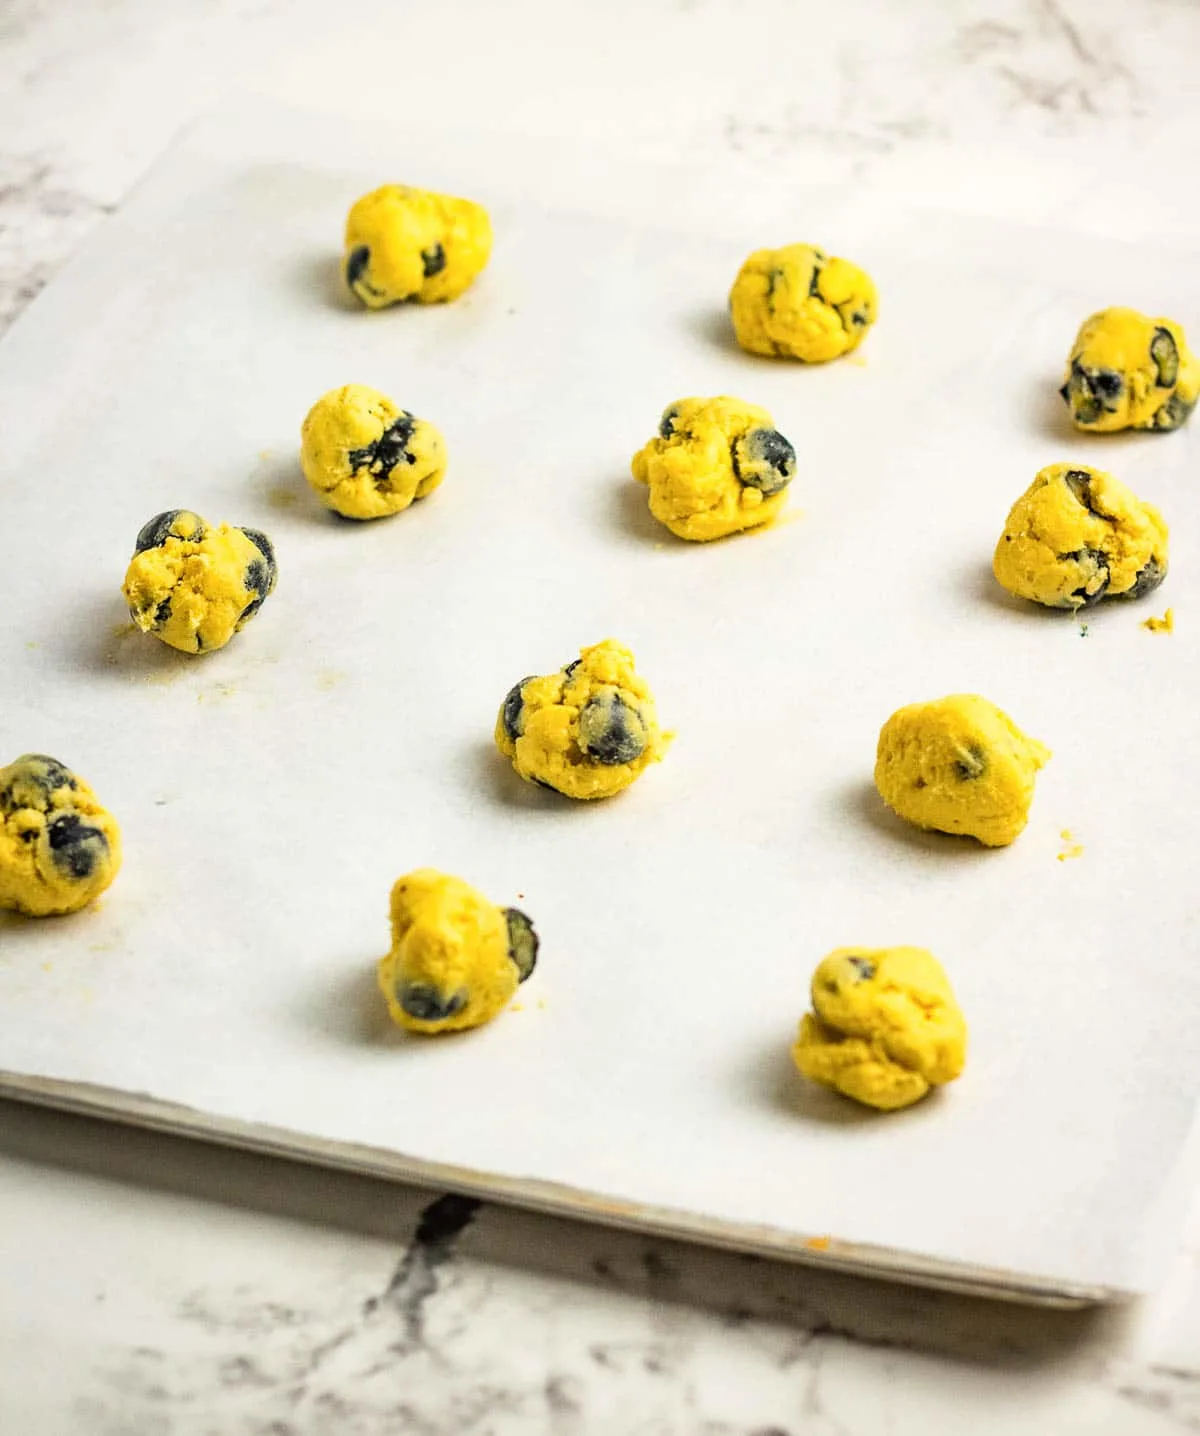 Lemon blueberry cookie dough balls scooped onto a baking sheet